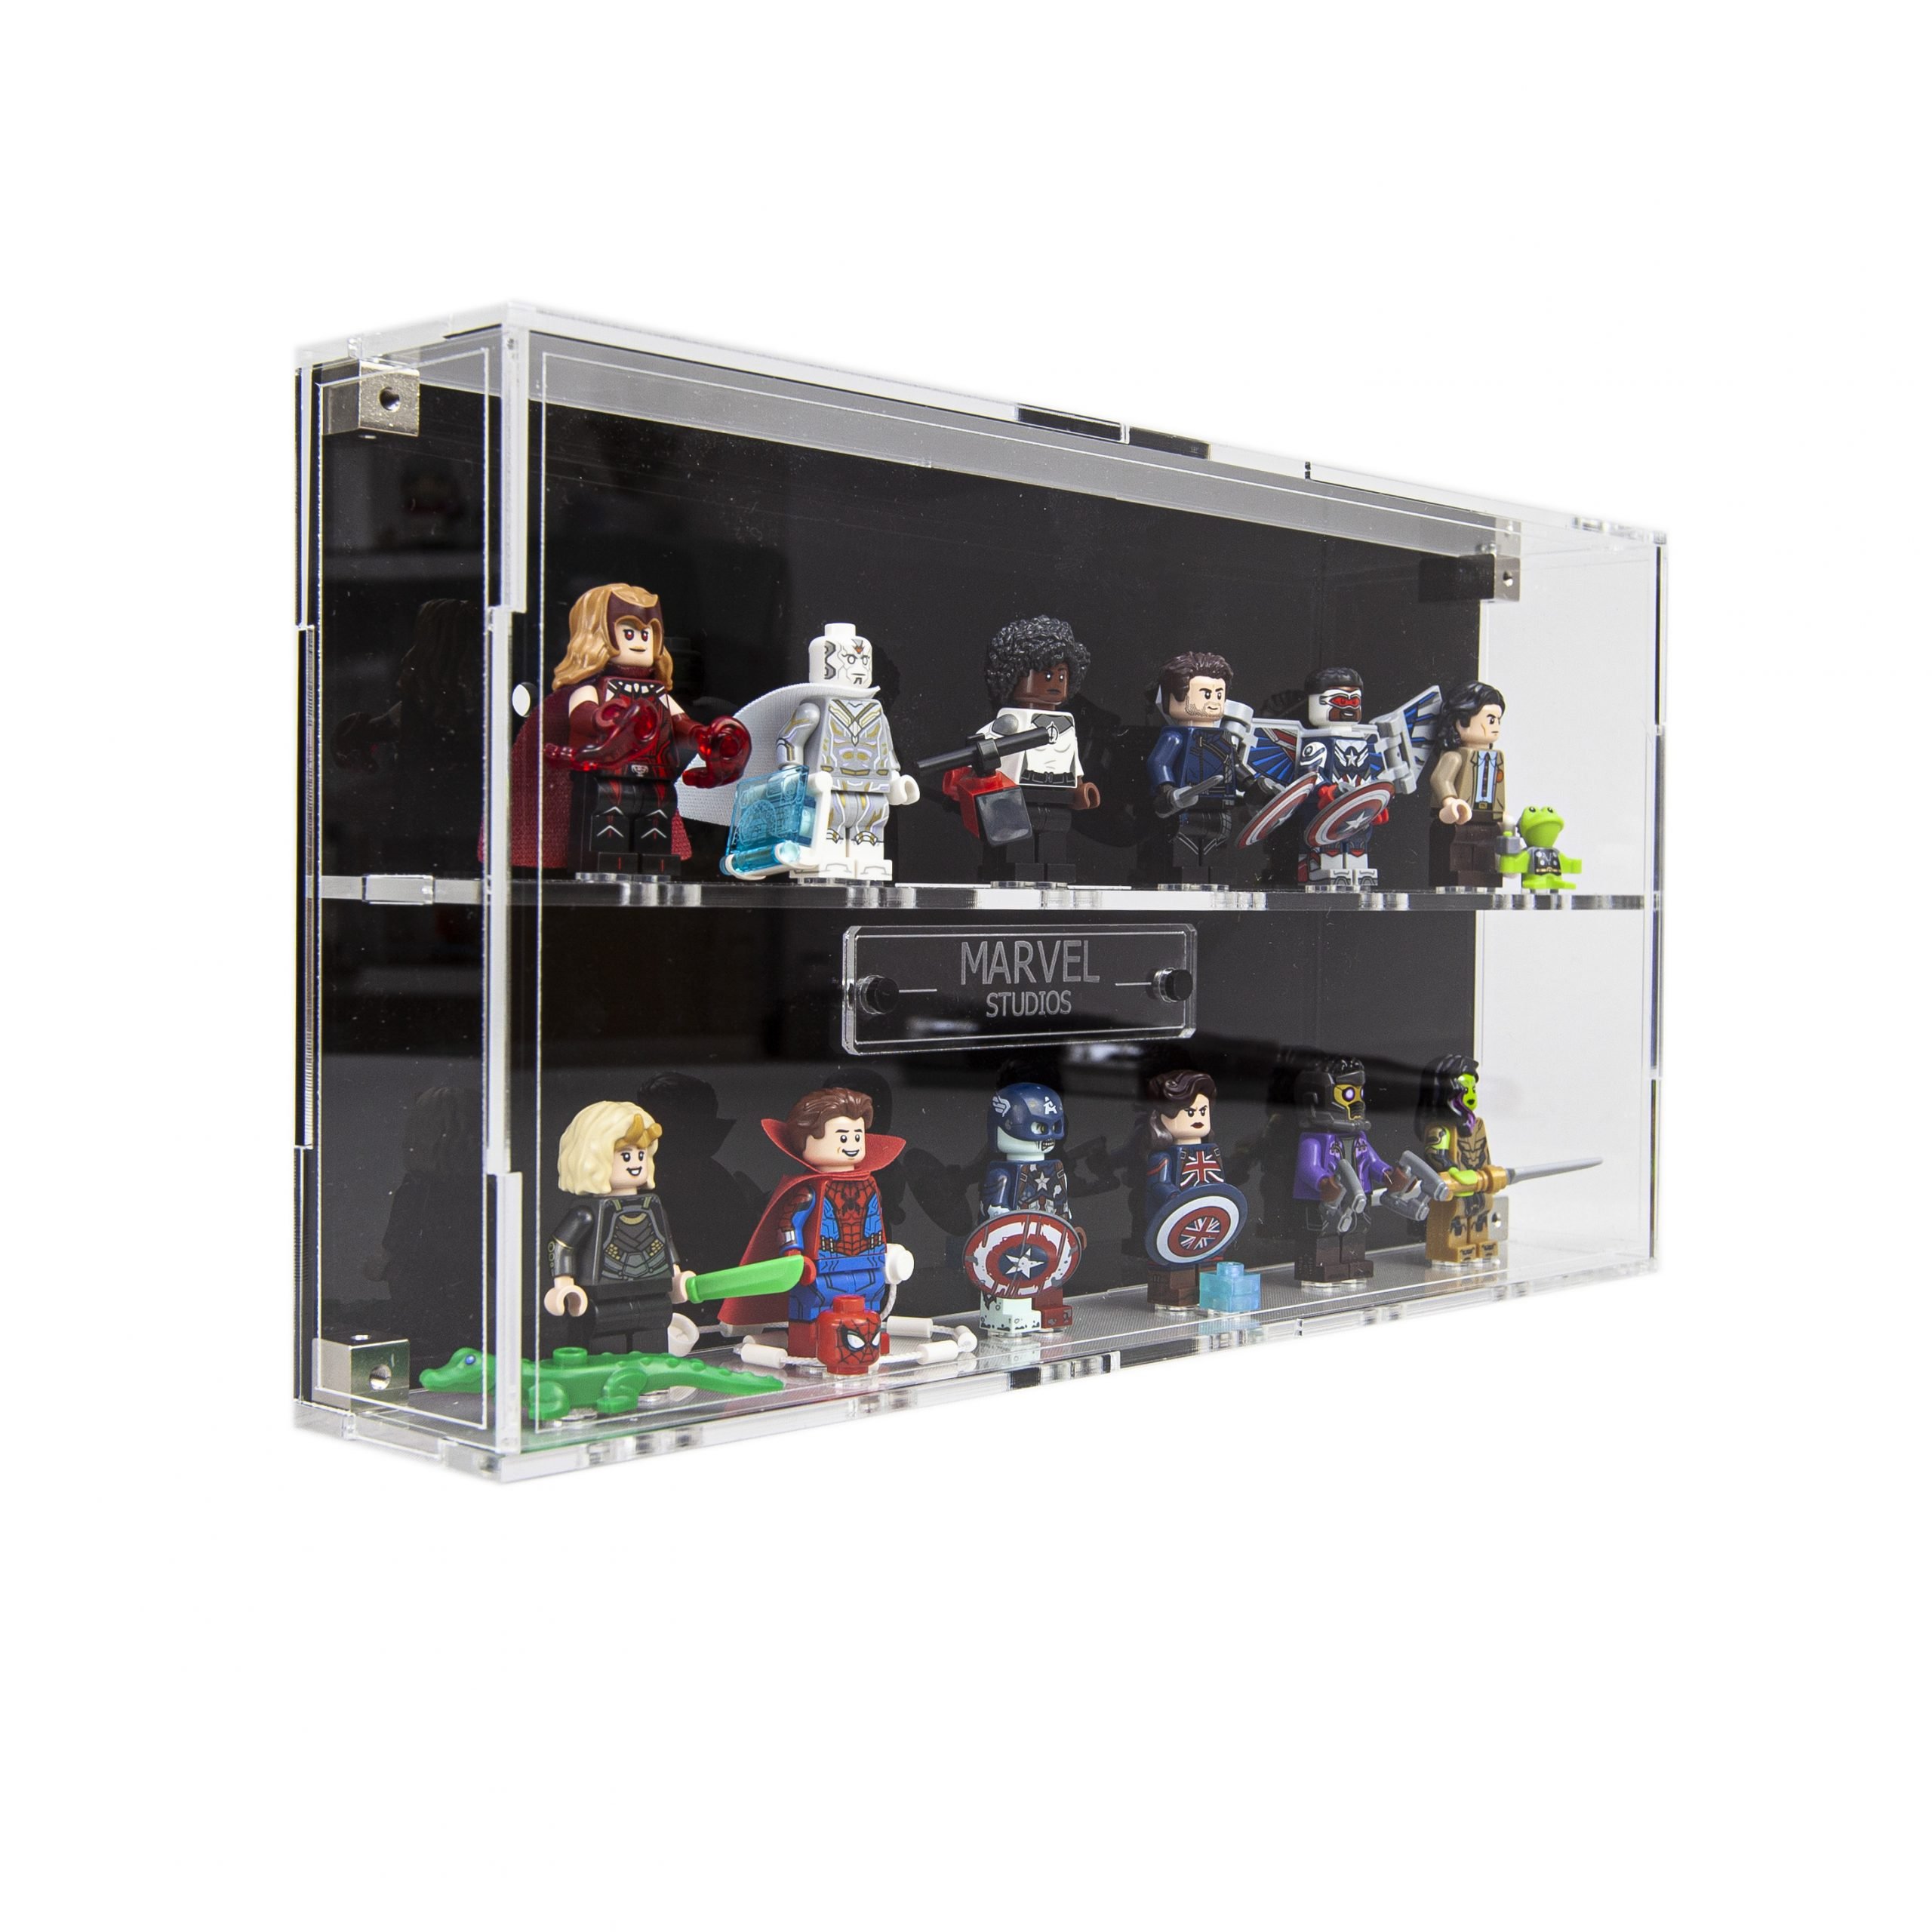 Acrylic Display Frame Insert For Lego Marvel Avengers Minifigures